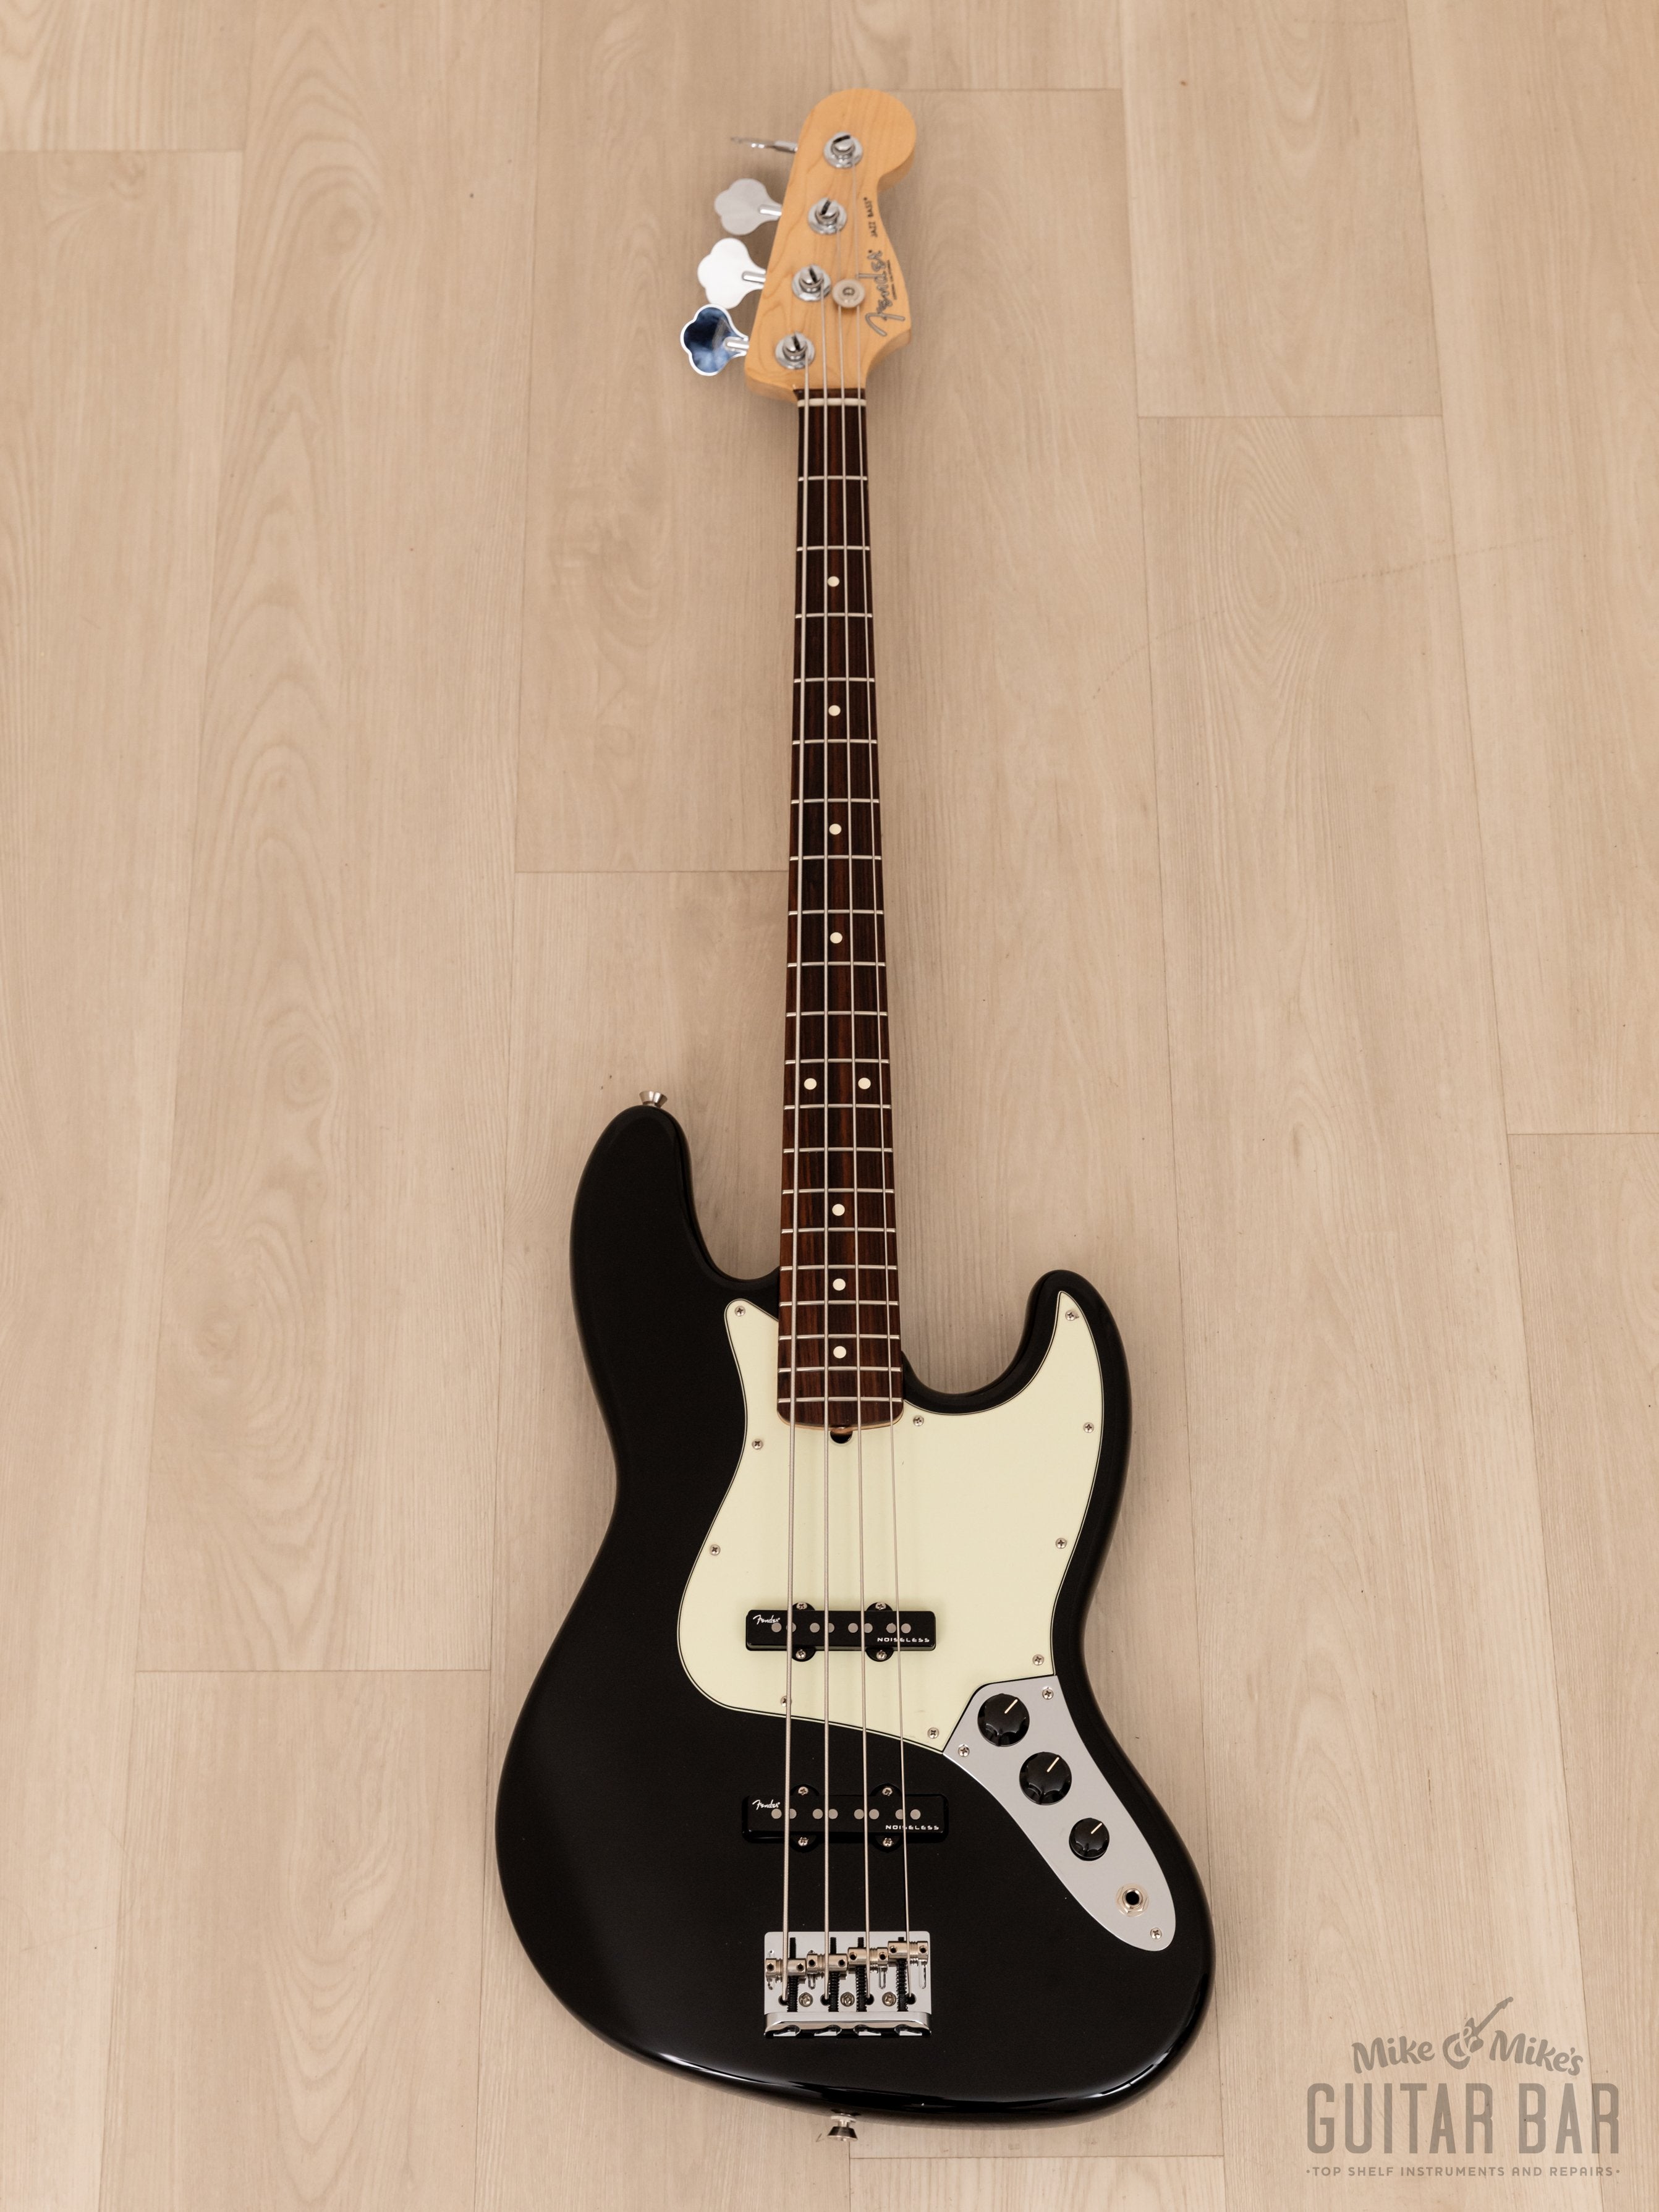 2023 Fender Mod Shop Jazz Bass Black w/ Noiseless Pickups, Case & Hangtags